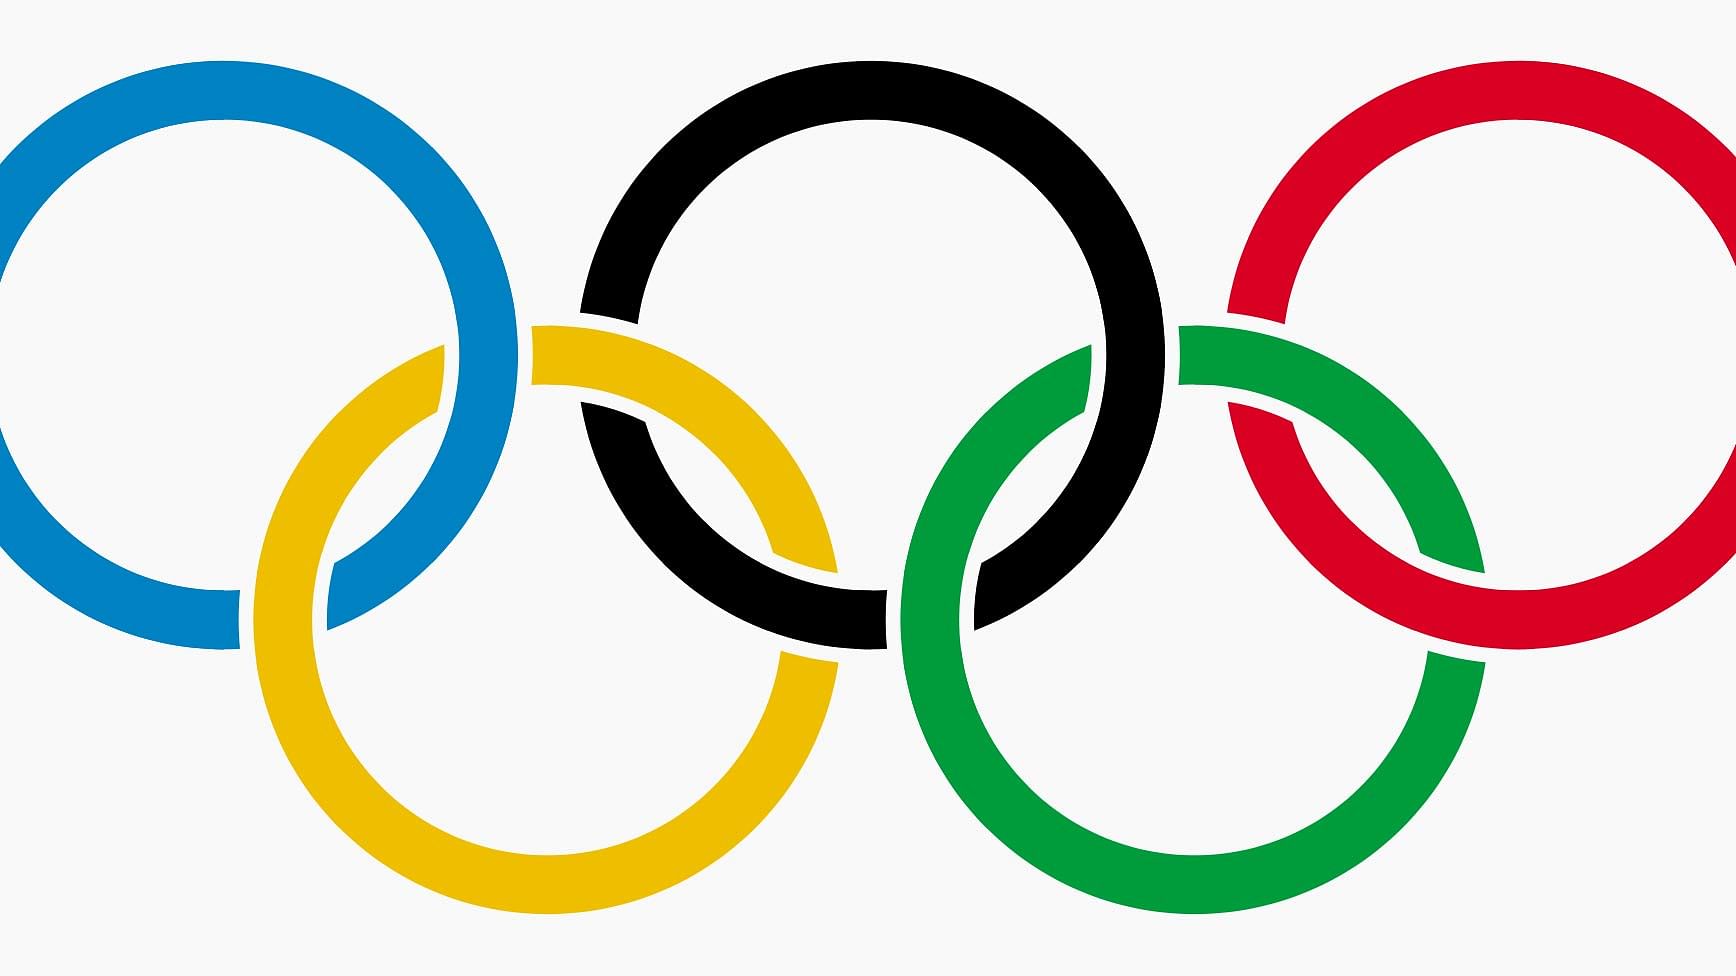 Paris' 2024 Olympics bid boosted by regional backing